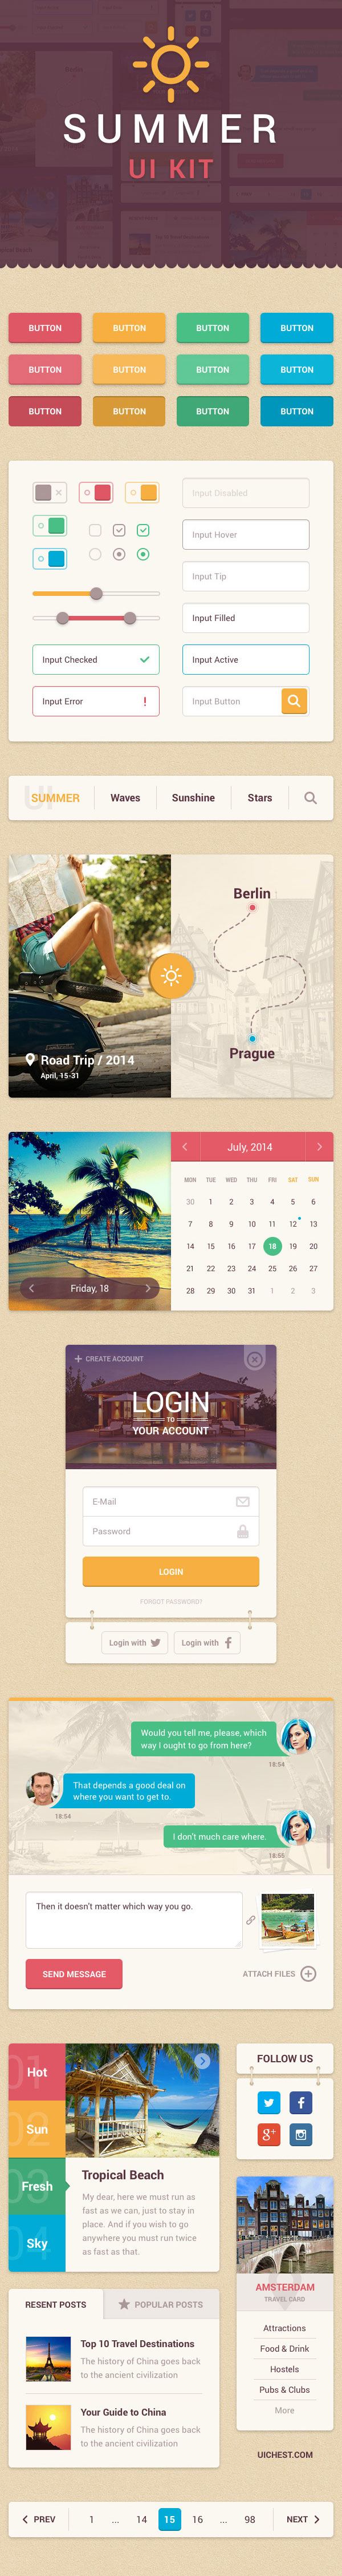 summer暑假旅行风格的手机APP界面PSD套装下载